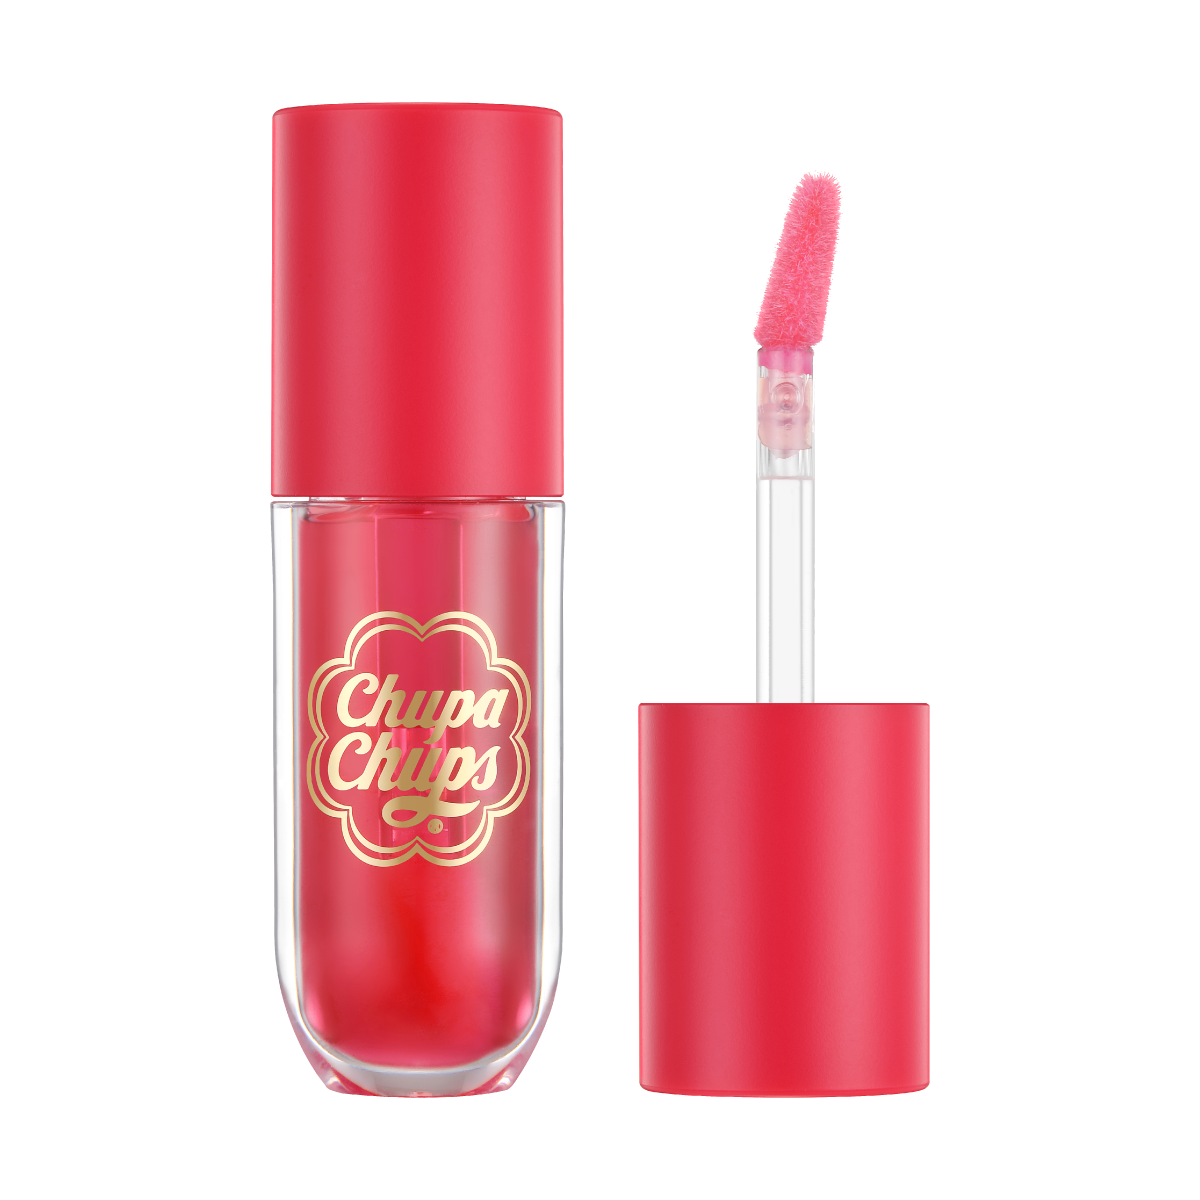 Chupa Chups Juicy Lip Oil Strawberry 4g - интернет-магазин профессиональной косметики Spadream, изображение 46430